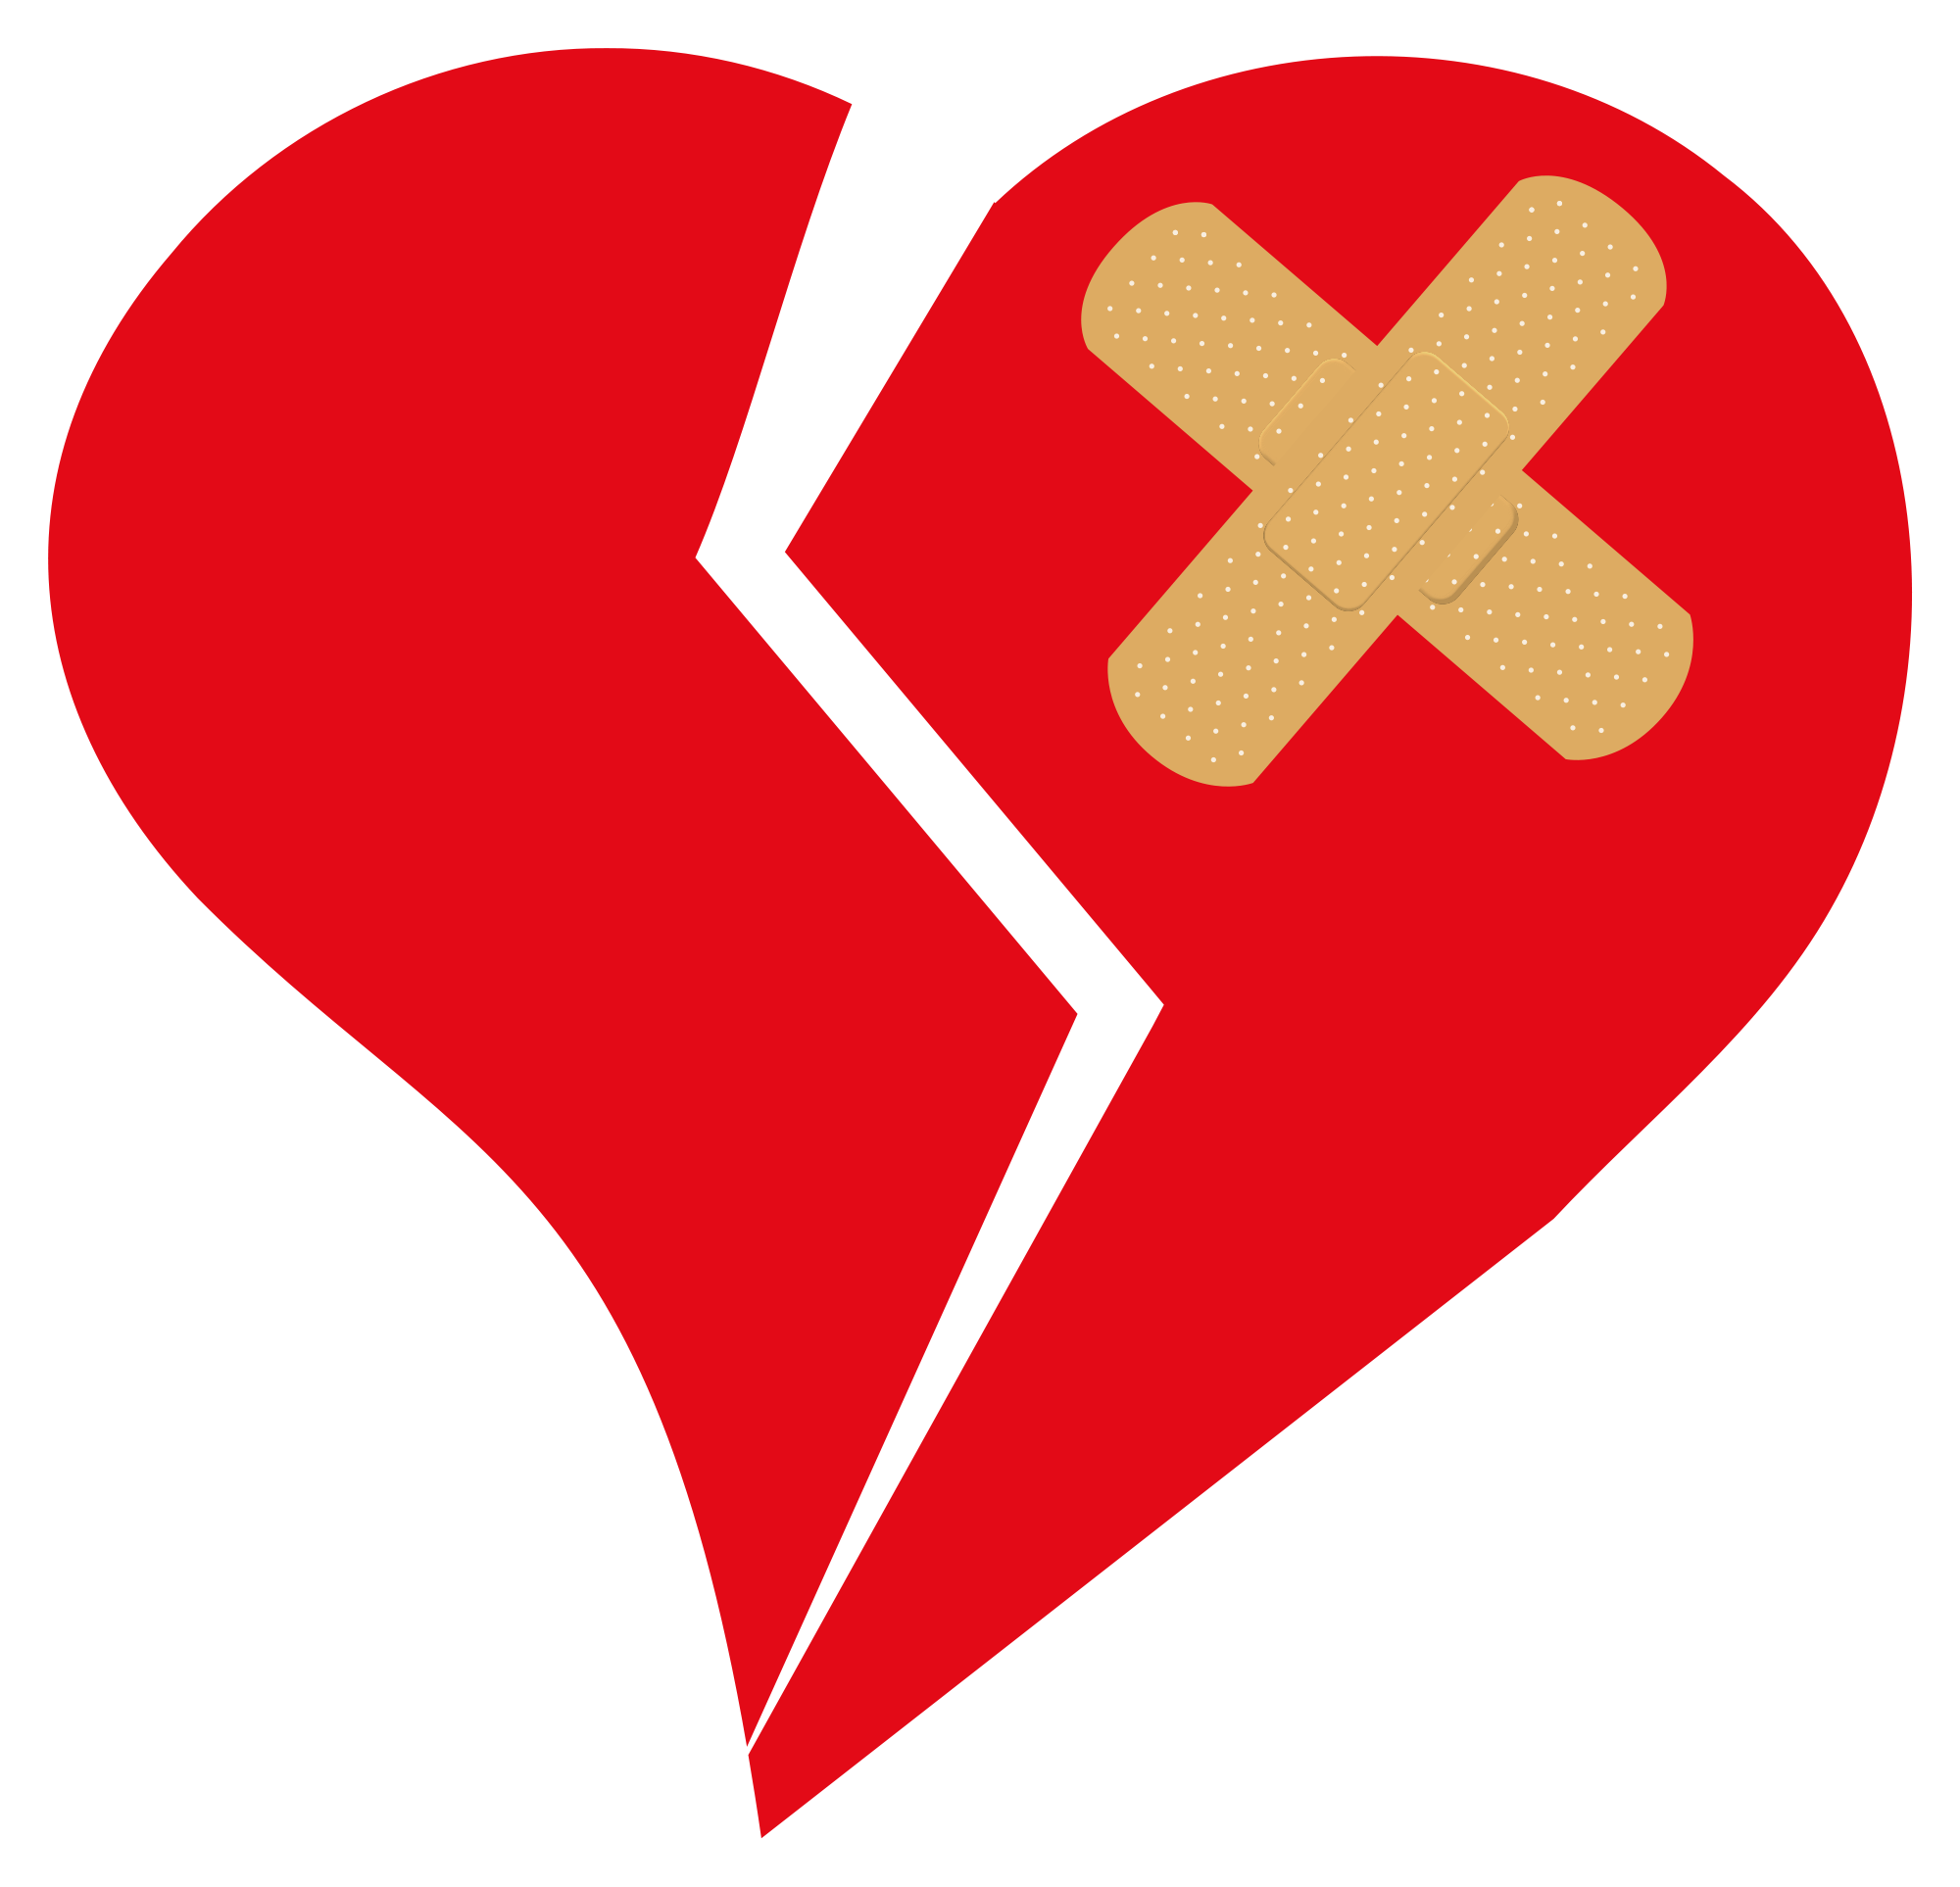 Broken heart clipart transparent - ClipartFox